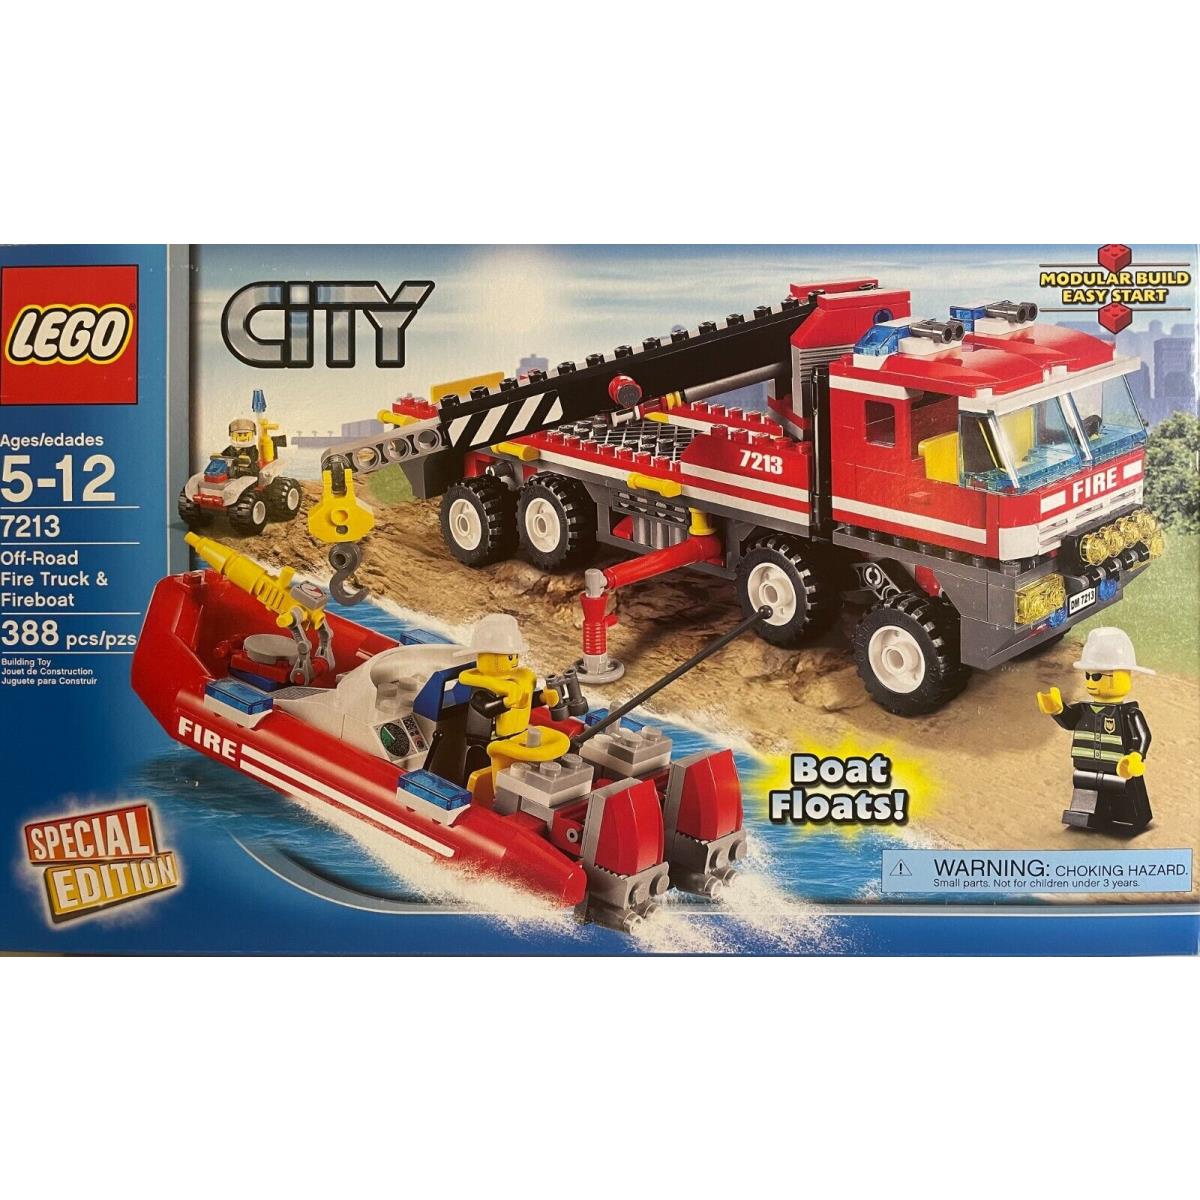 Lego 7213 Off Road Fire Truck Fireboat Retired Set